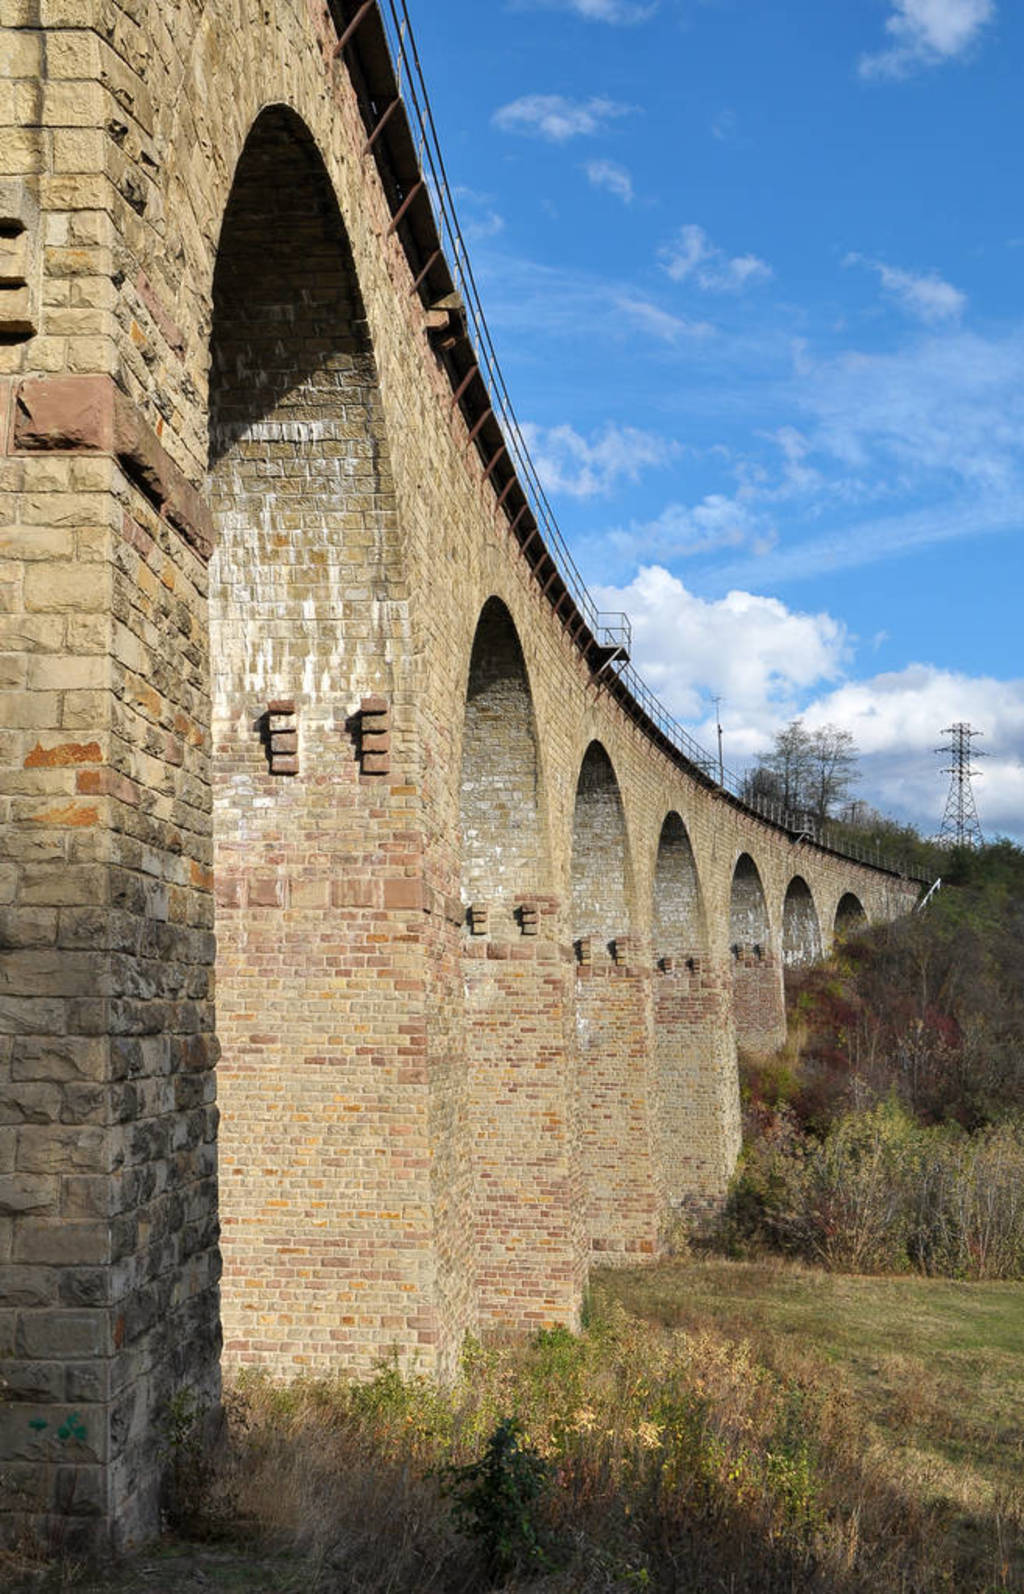 Viaduct is a 9-arch railway bridge in the village of Plebanivka